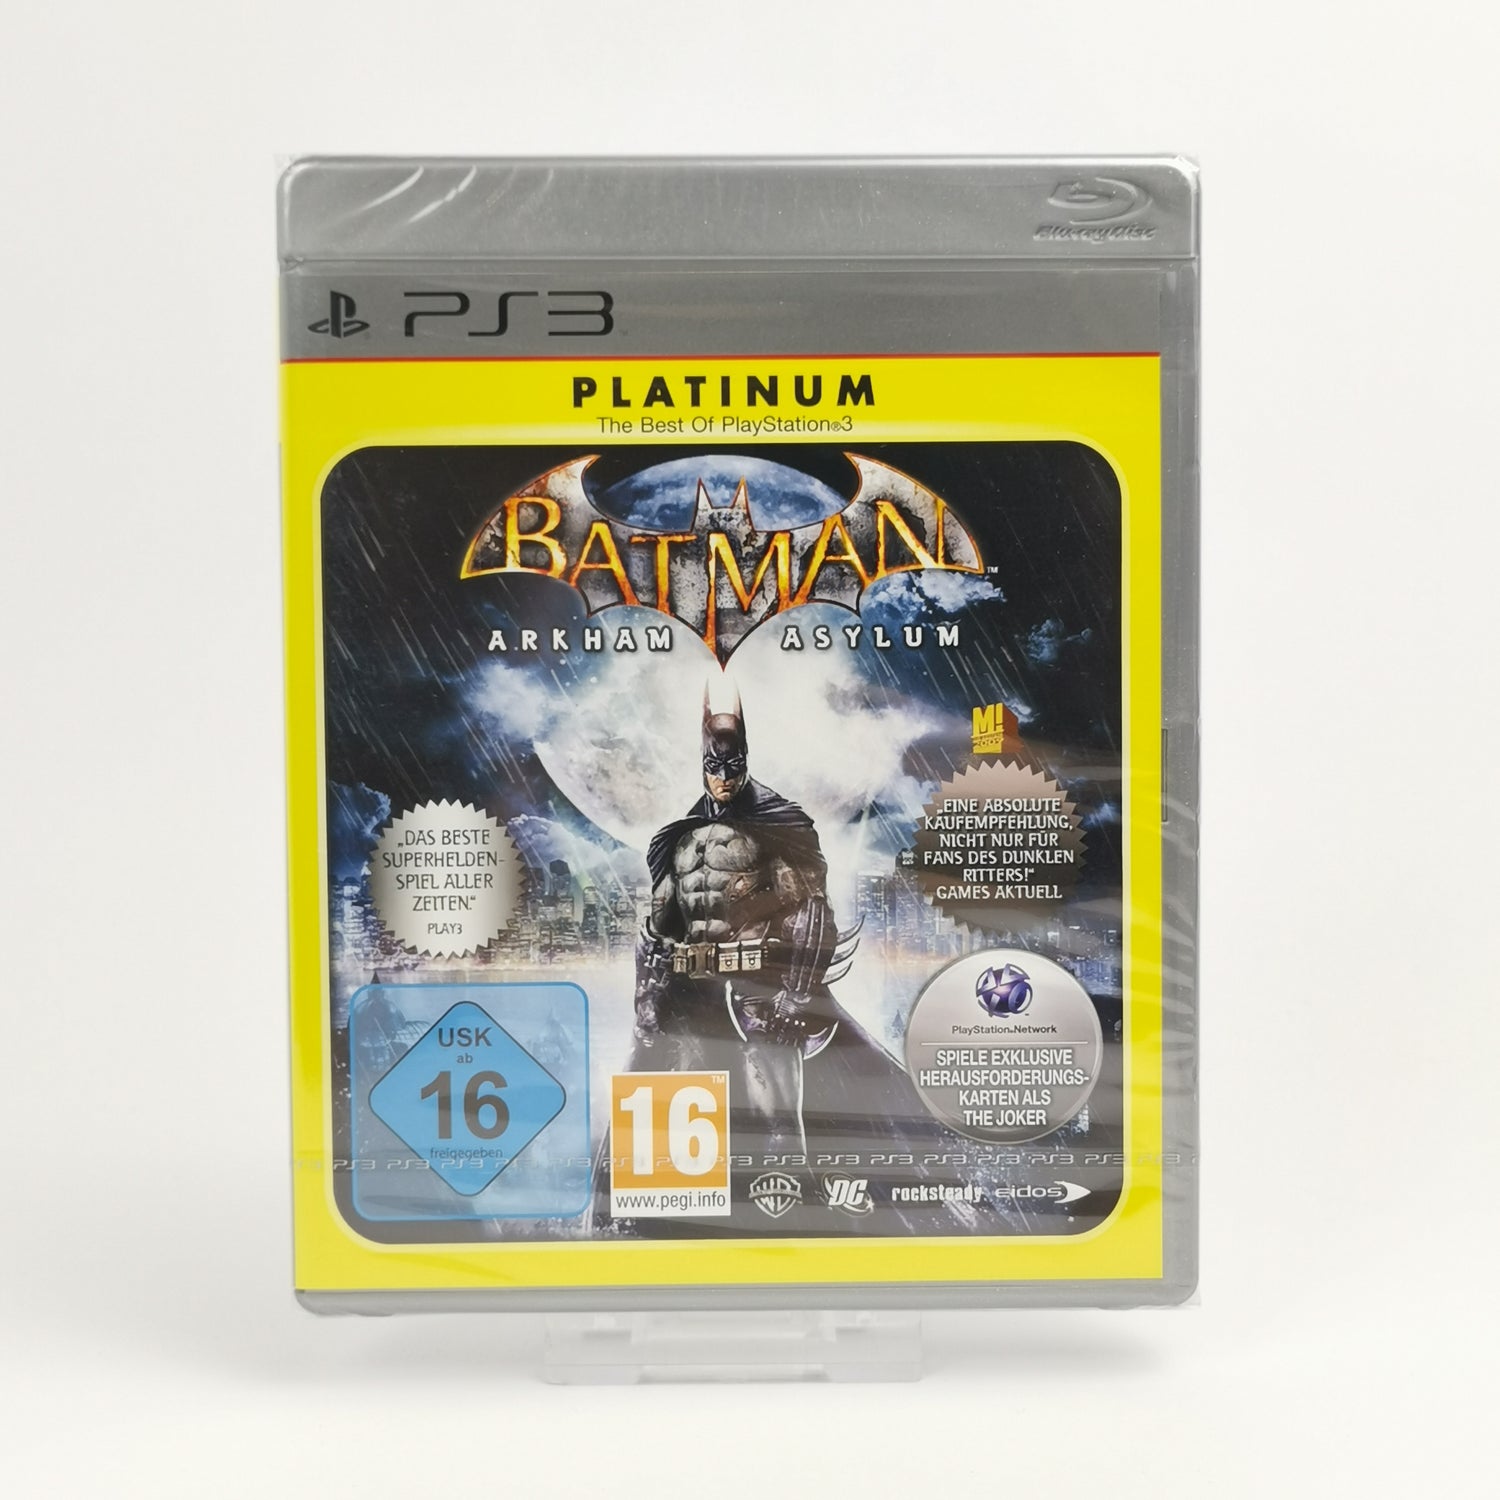 Sony Playstation 3 Game: Batman Arkham Asylum | PS3 Platinum - NEW NEW SEALED